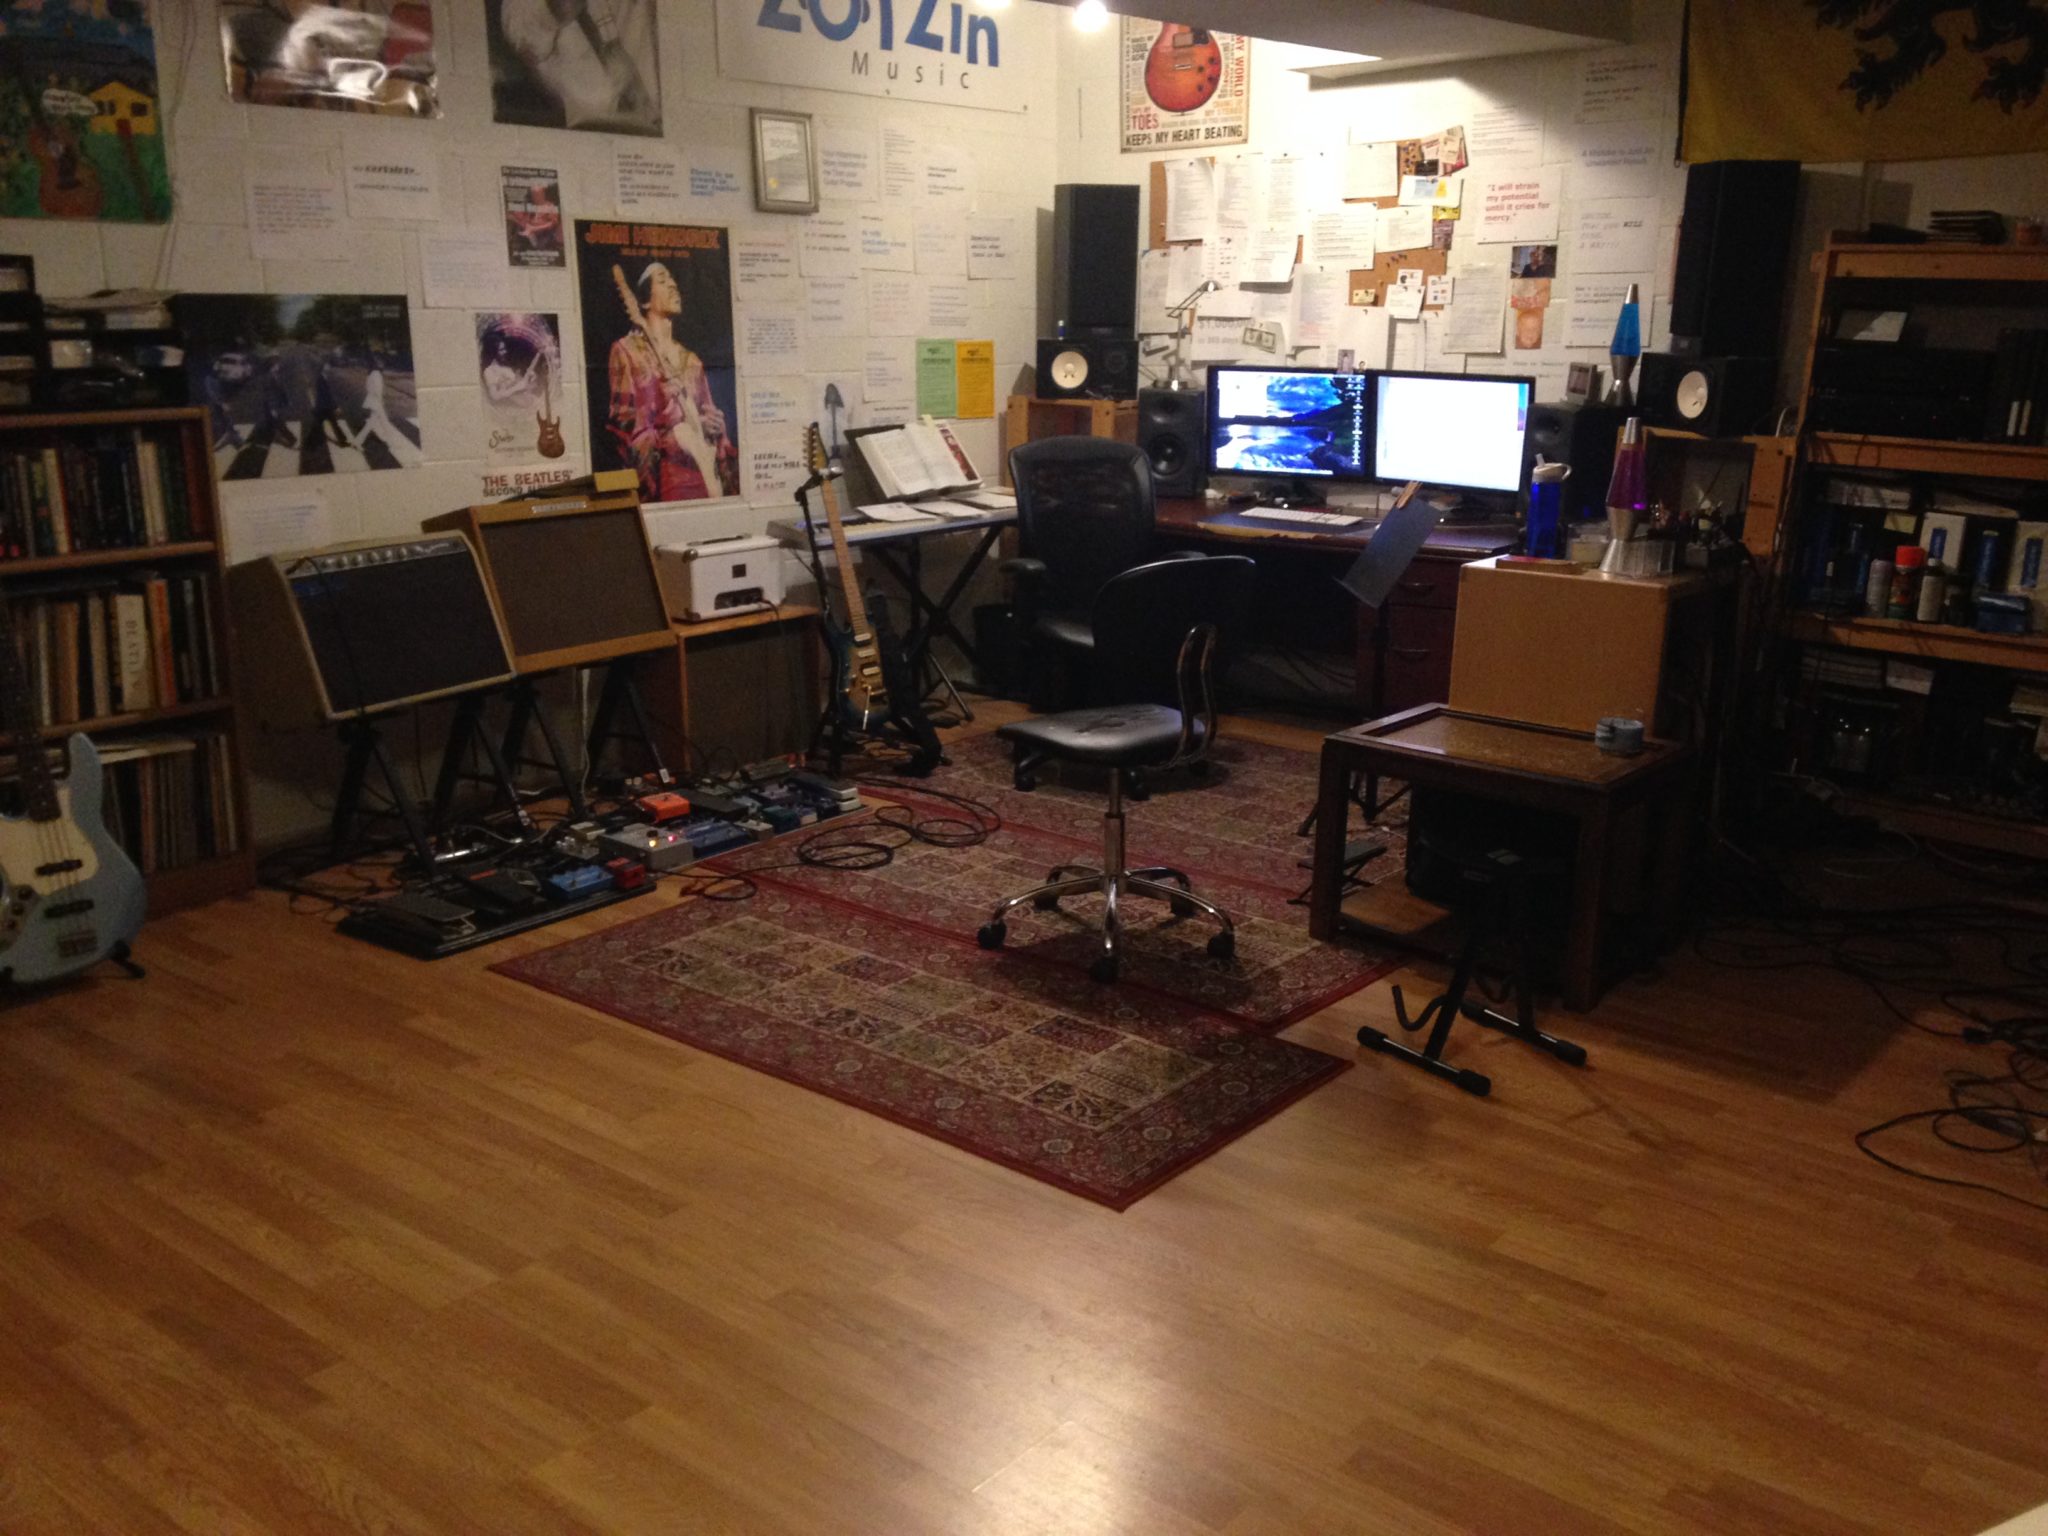  The ZOT Zin Music guitar lessons studio